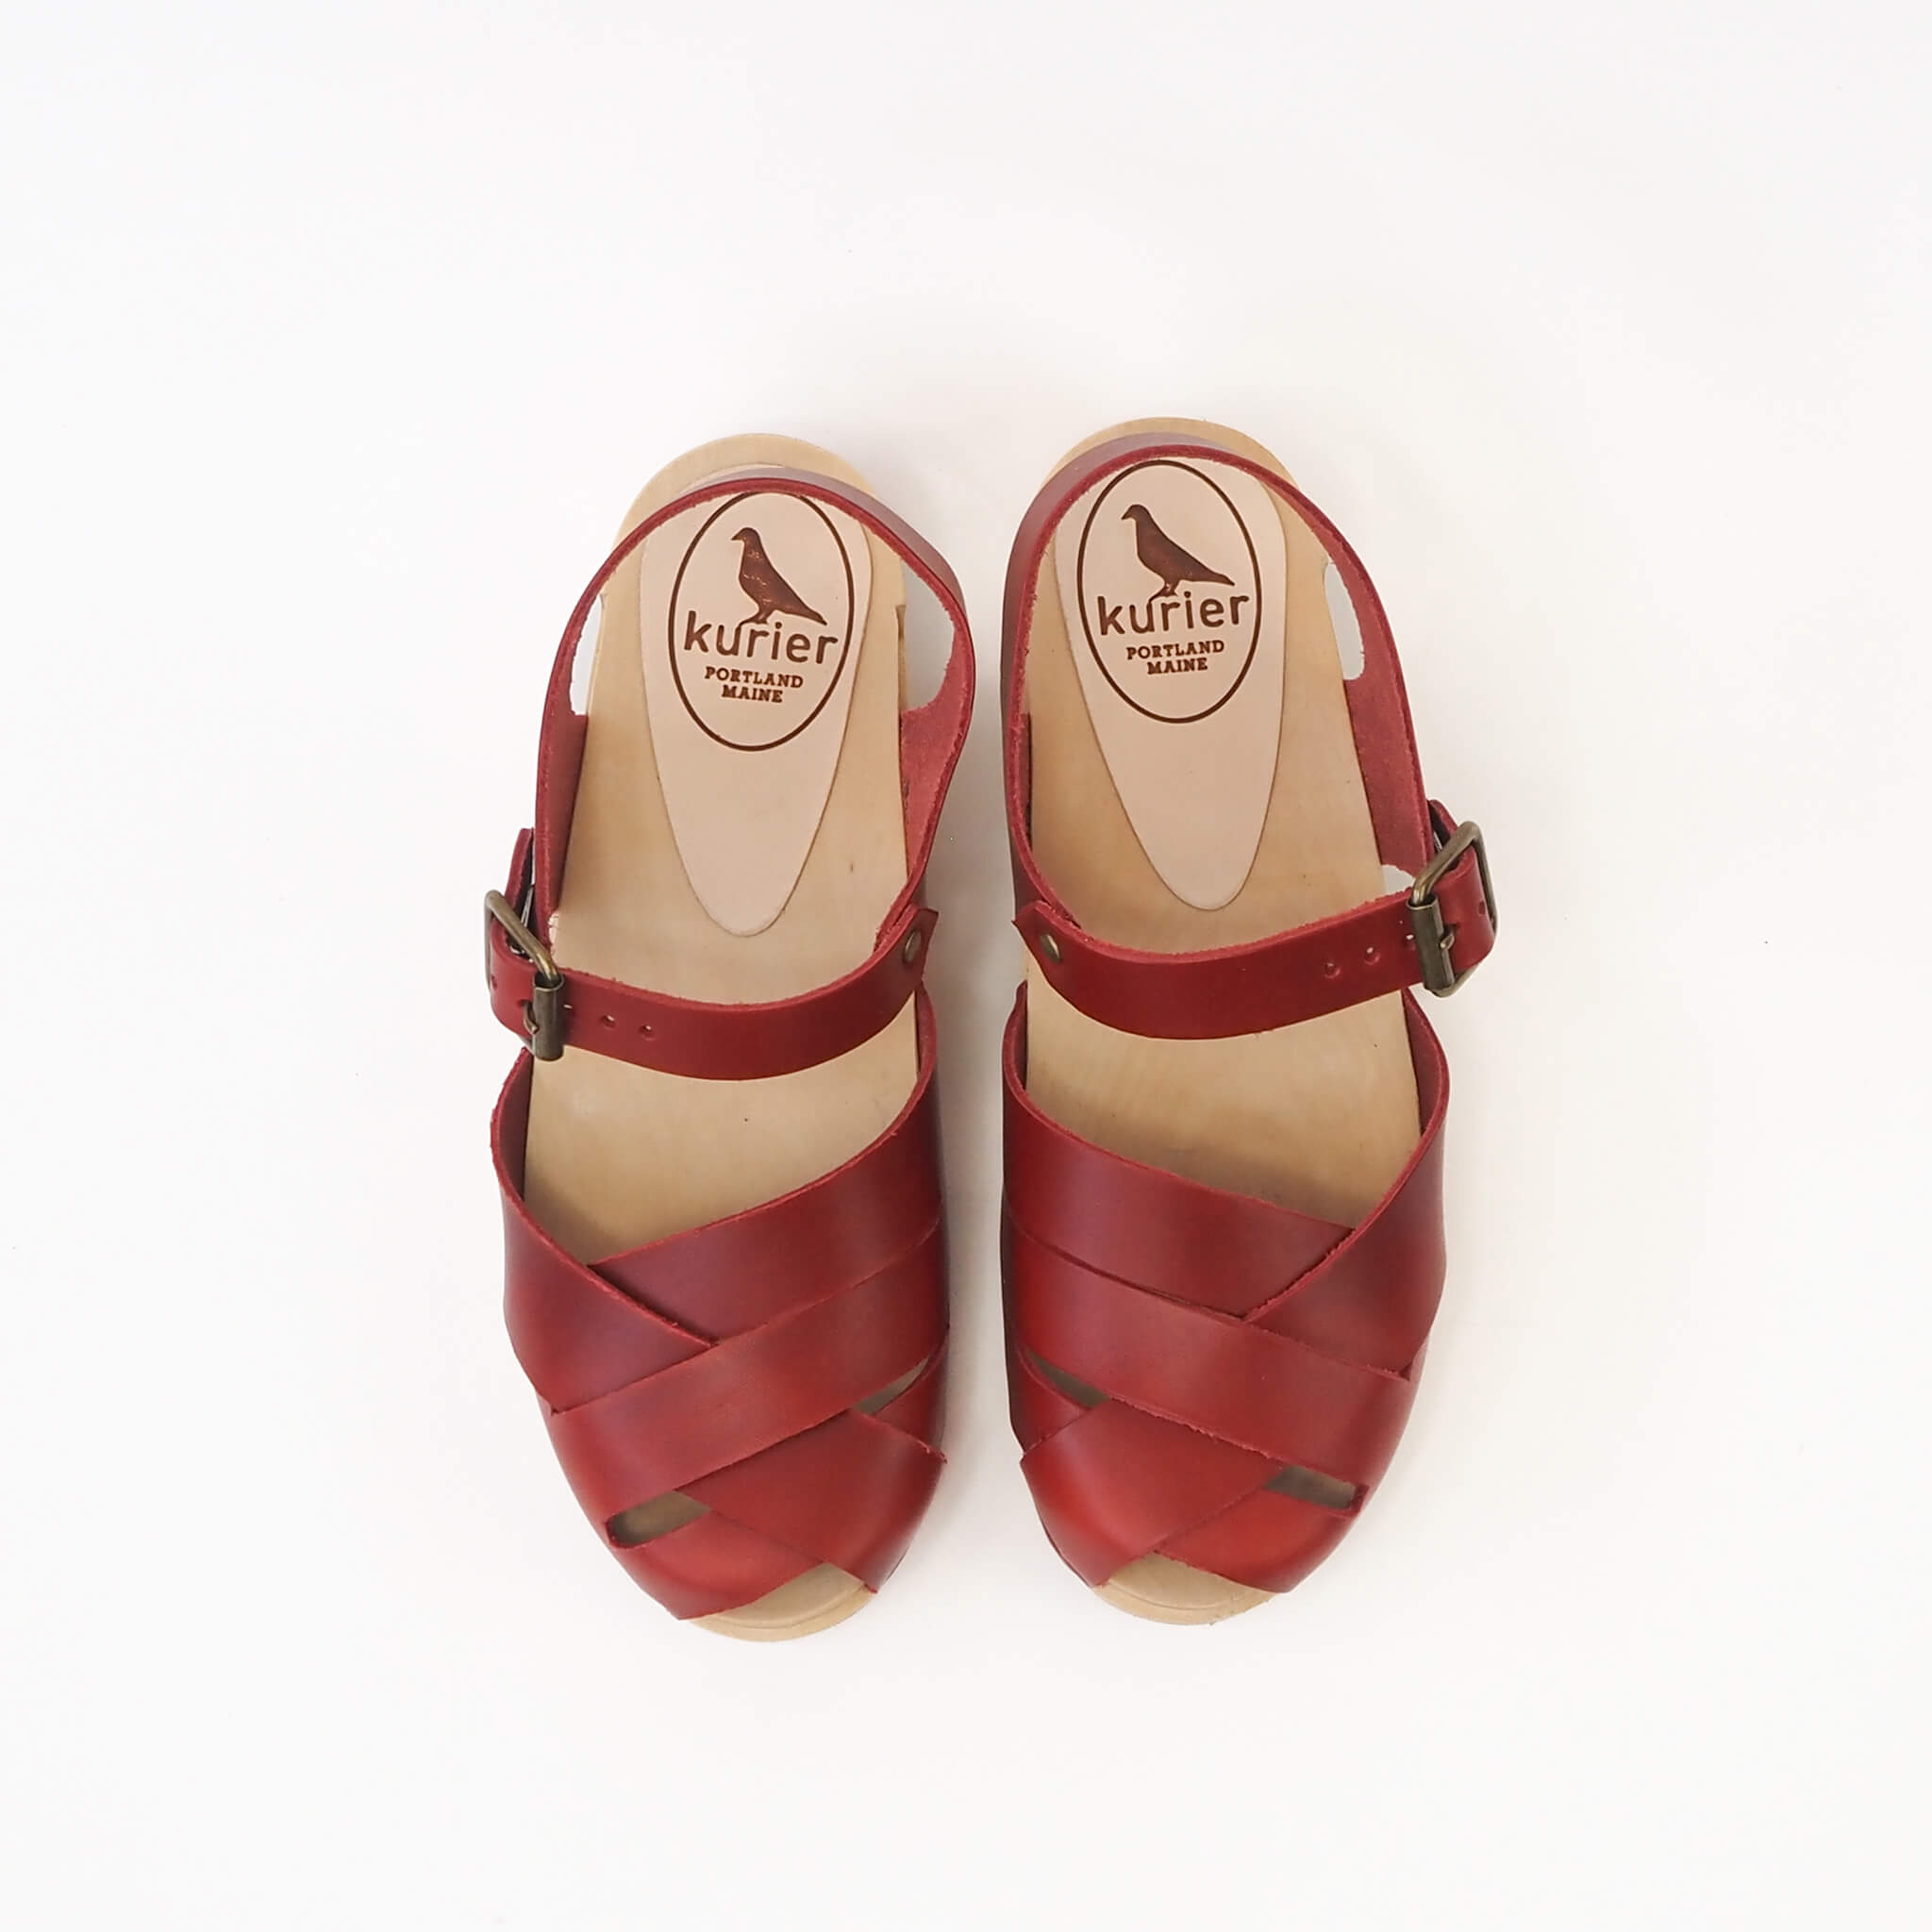 emelia clog low heel peep toe mary janesandal handmade american leather wood - cherry top view